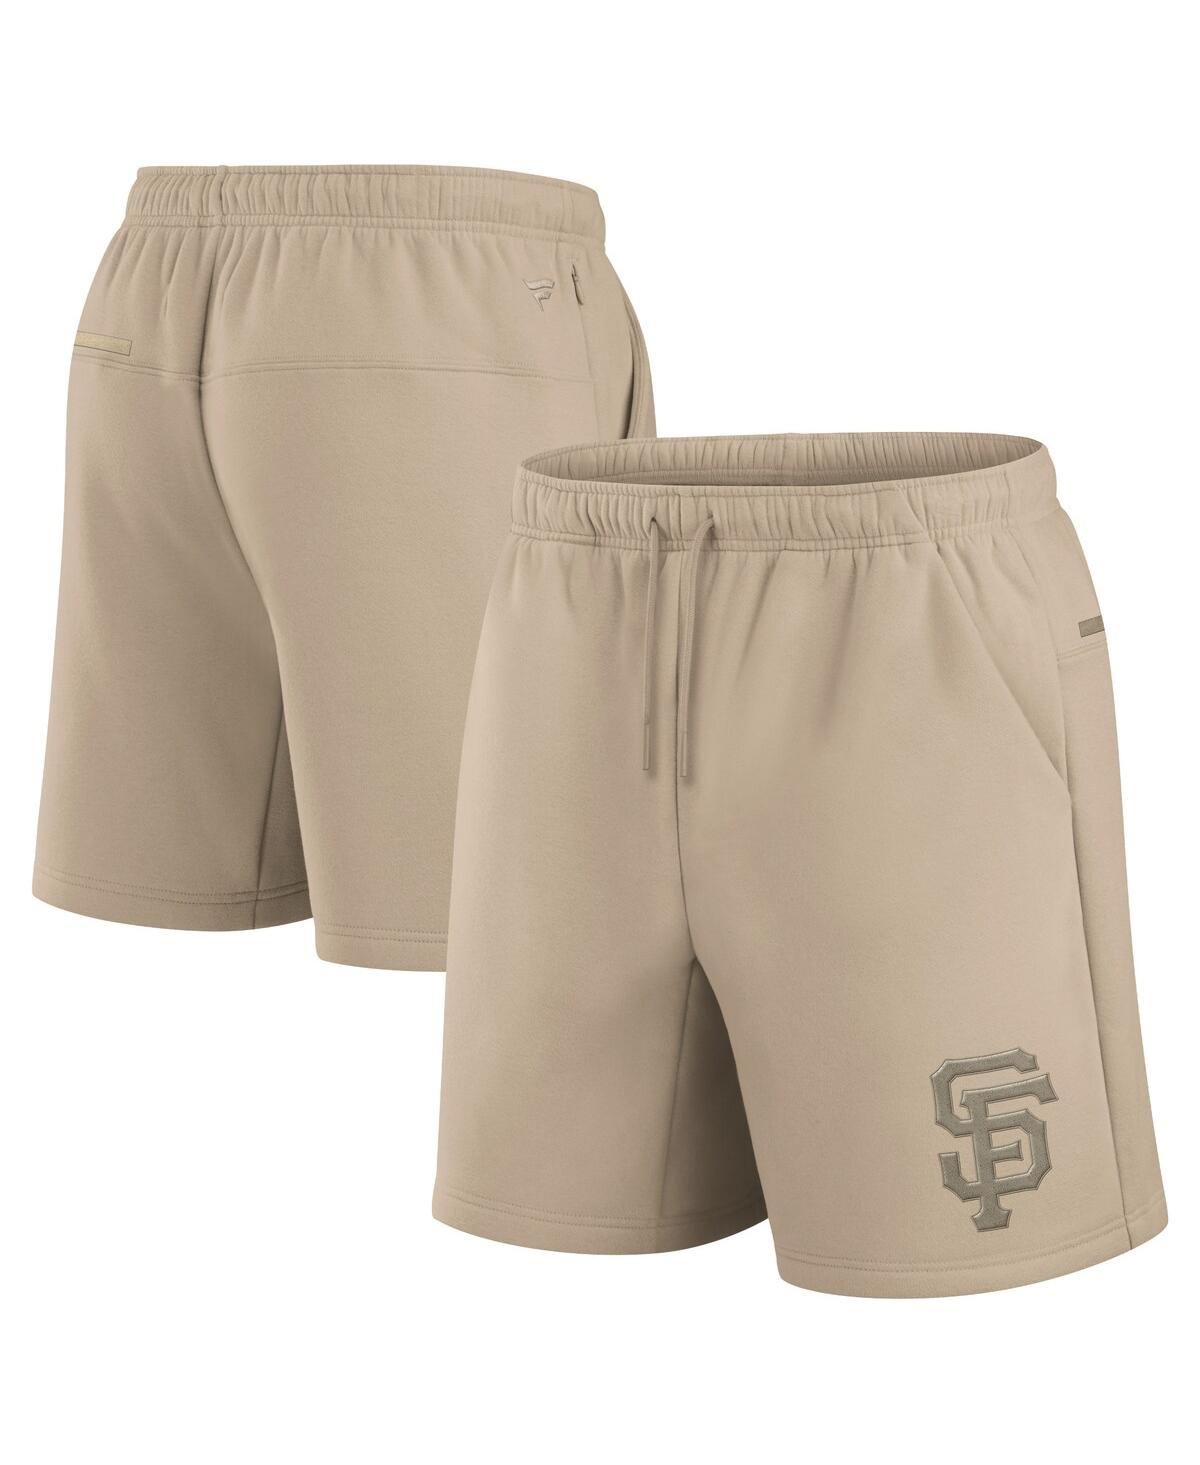 Men's and Women's Khaki San Francisco Giants Elements Super Soft Fleece Shorts - Khaki